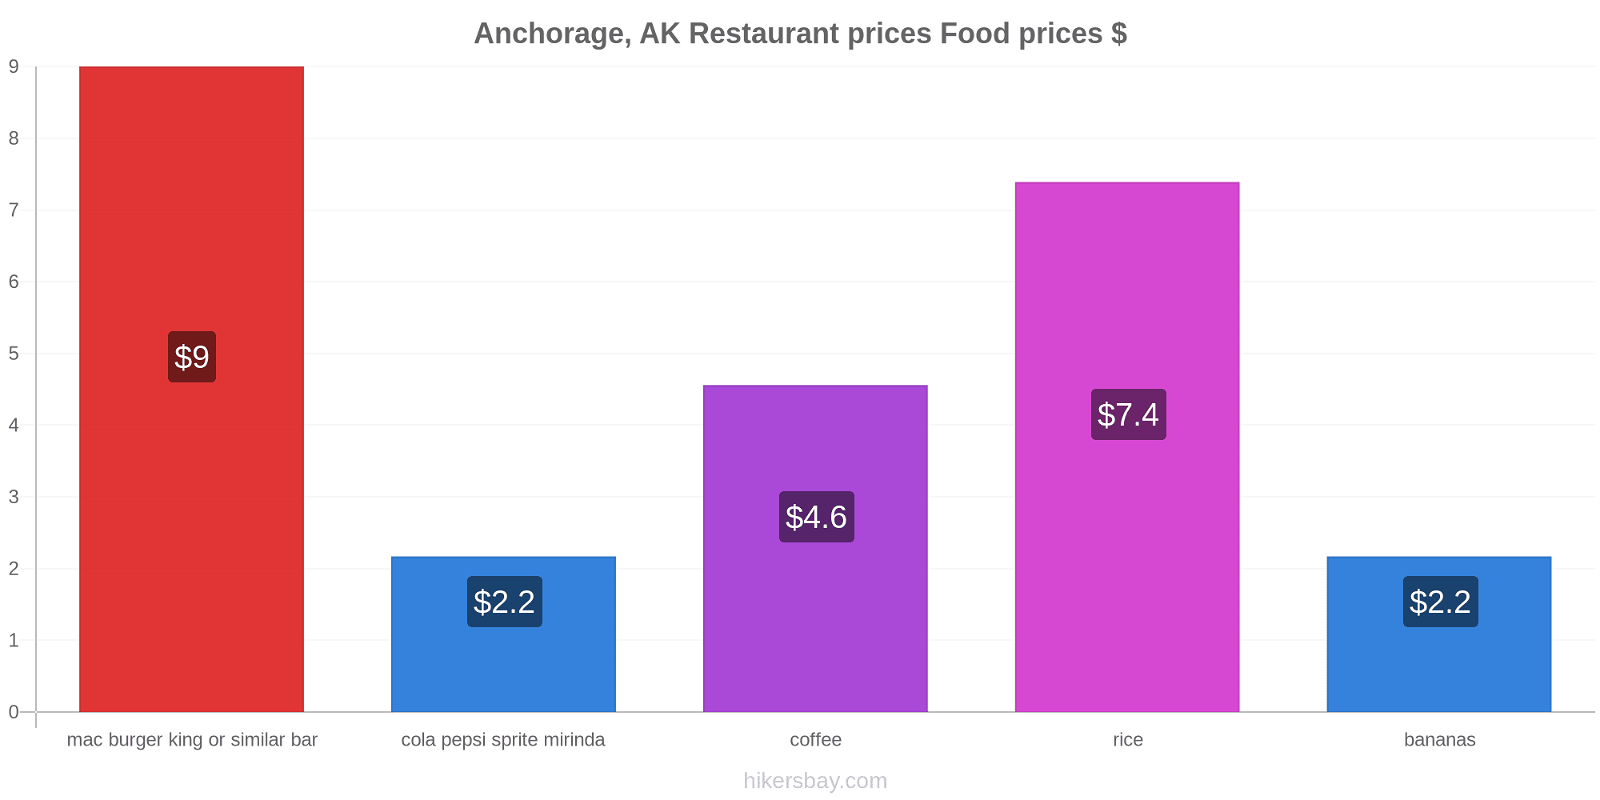 Anchorage, AK price changes hikersbay.com